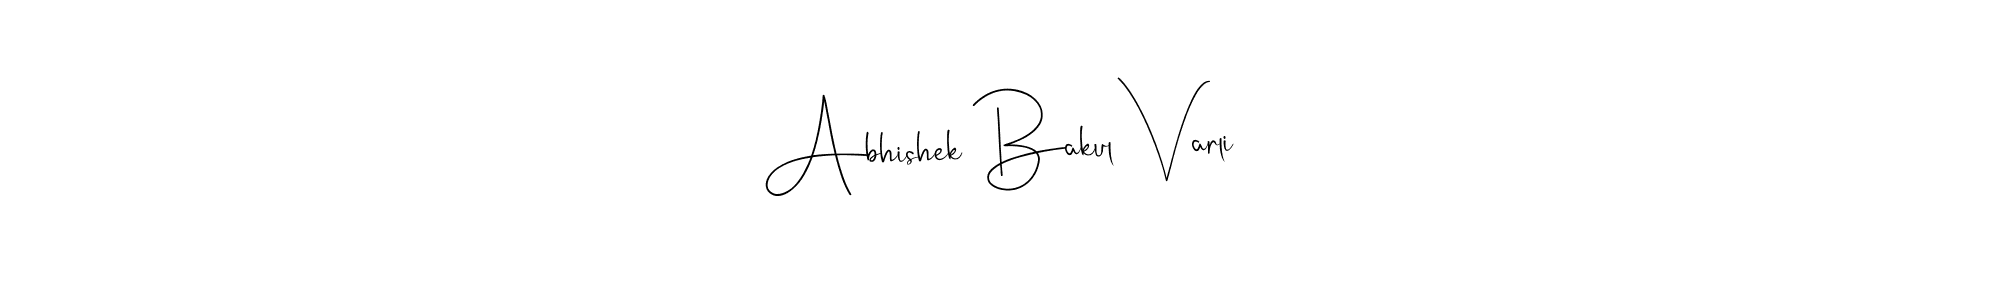 How to Draw Abhishek Bakul Varli signature style? Andilay-7BmLP is a latest design signature styles for name Abhishek Bakul Varli. Abhishek Bakul Varli signature style 4 images and pictures png